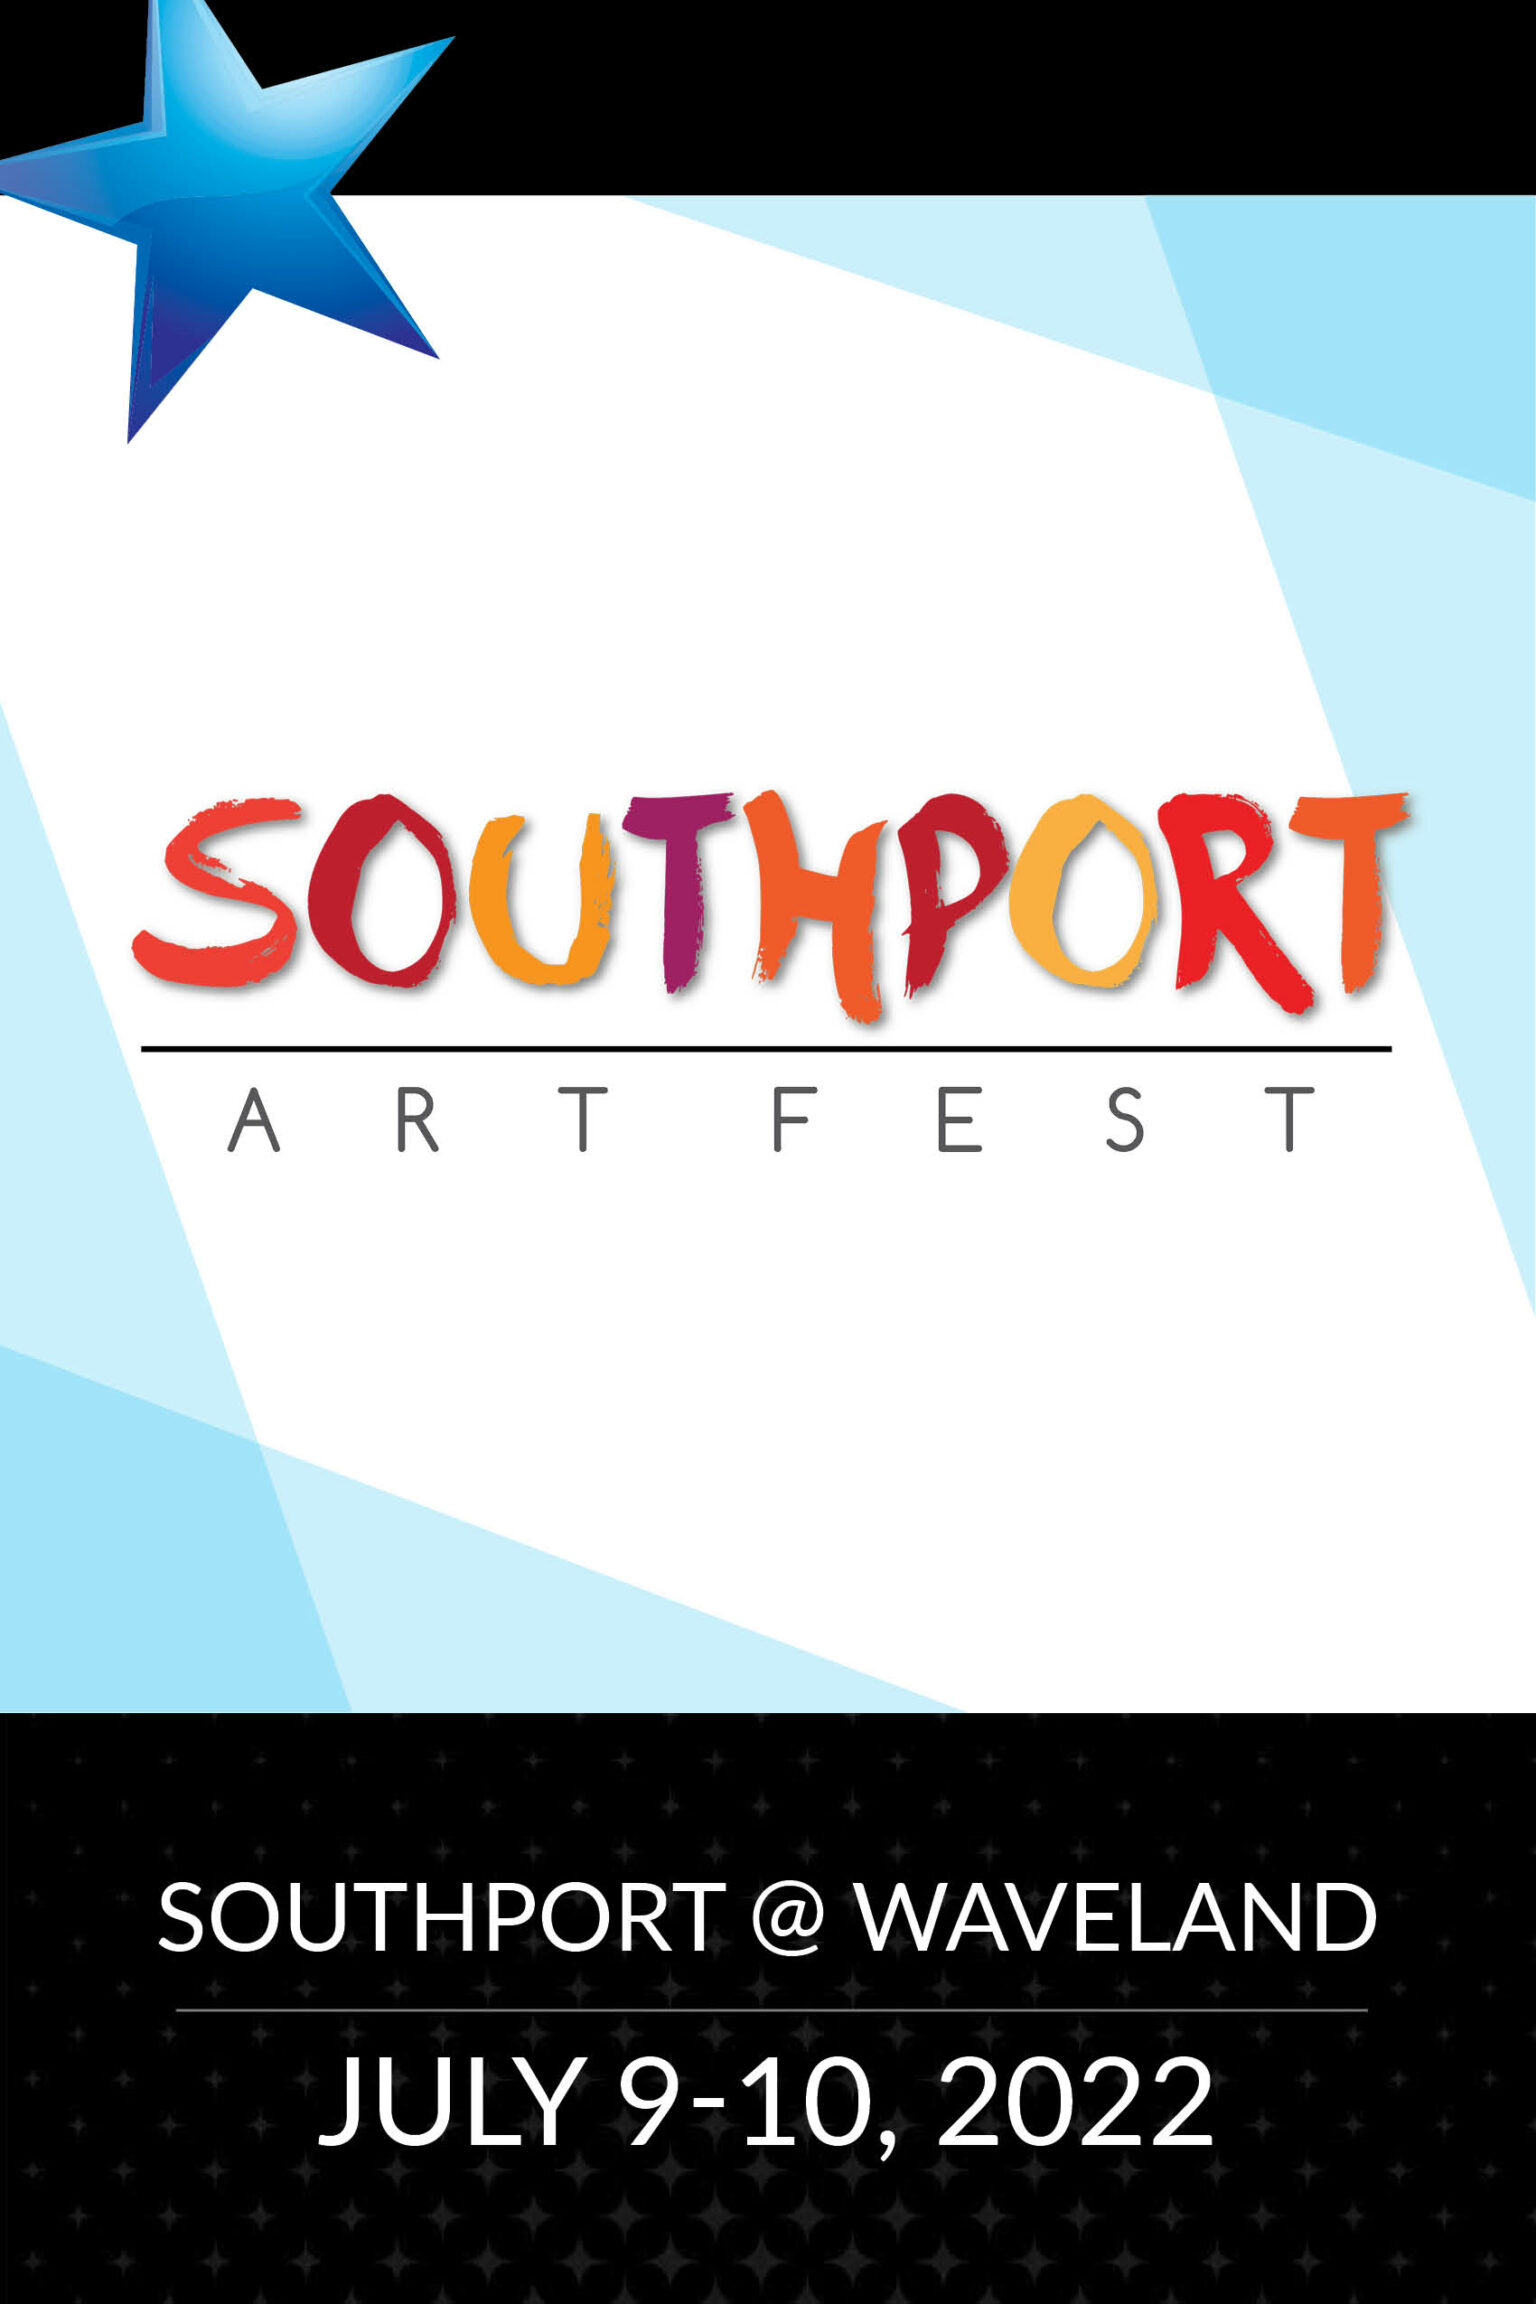 Southport Art Fest 2022 StarEvents